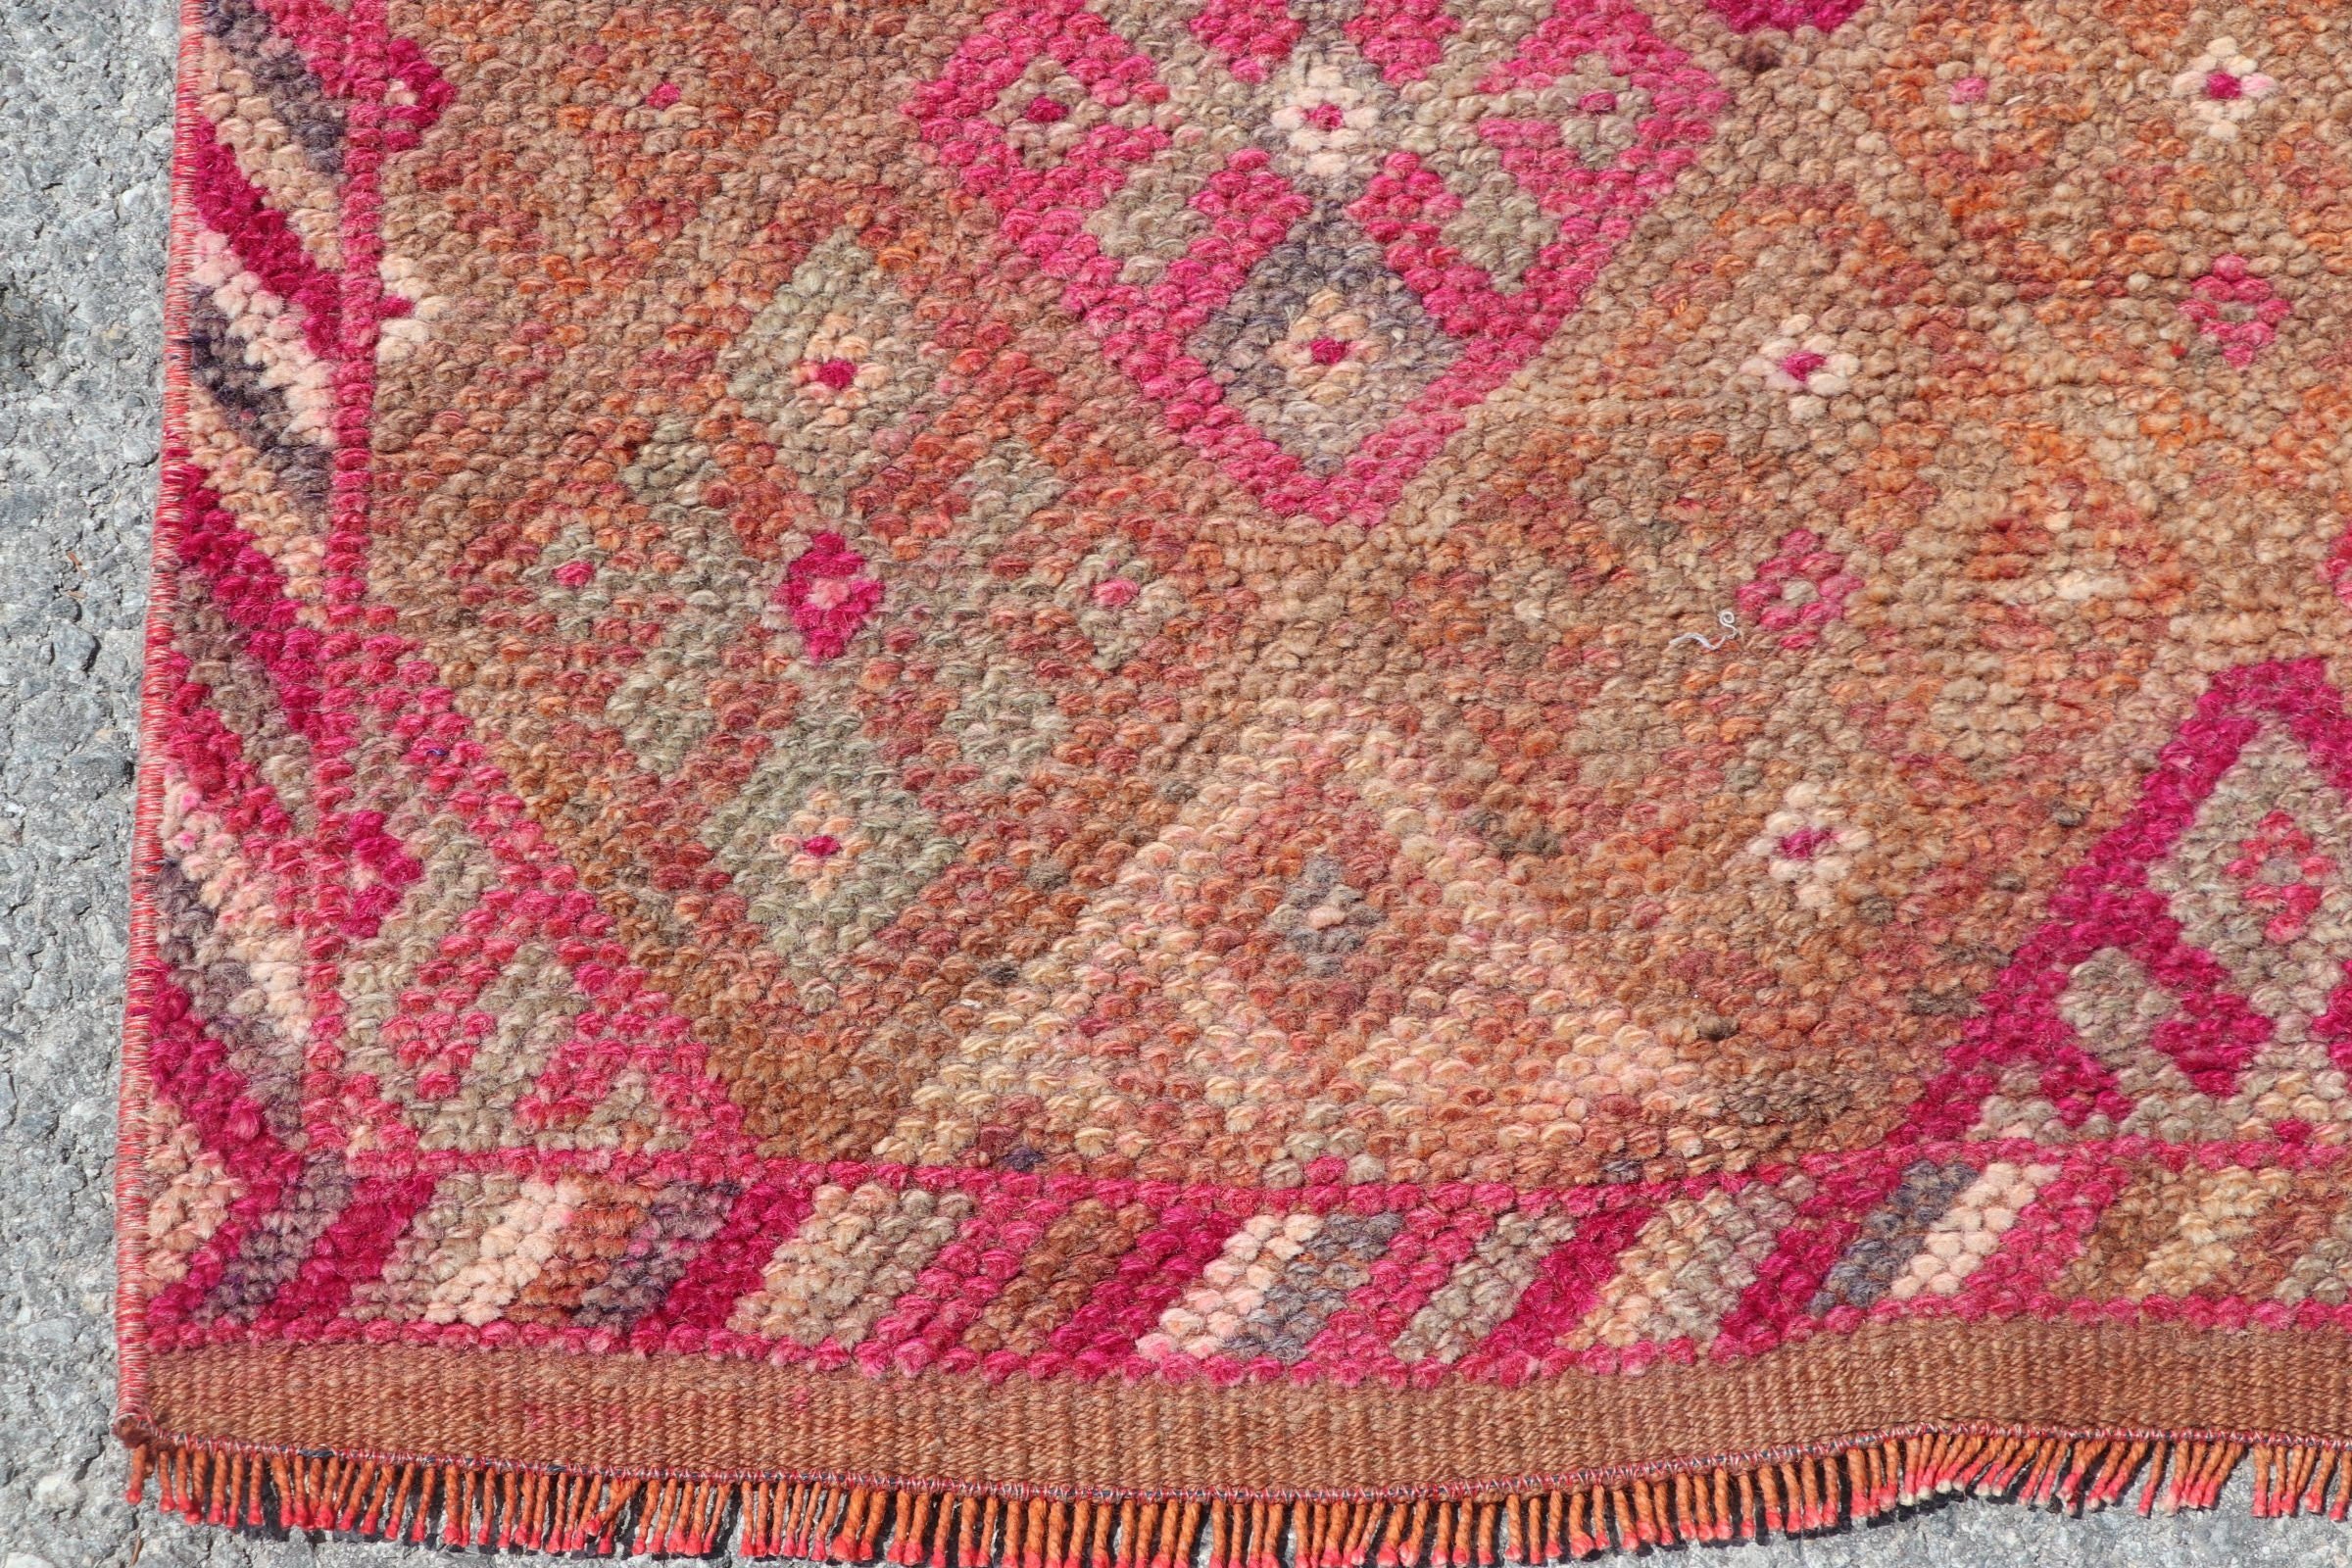 Vintage Rug, Antique Rug, Rugs for Runner, Anatolian Rugs, Pink Kitchen Rug, Corridor Rug, Cute Rugs, Turkish Rugs, 2.7x11.8 ft Runner Rug